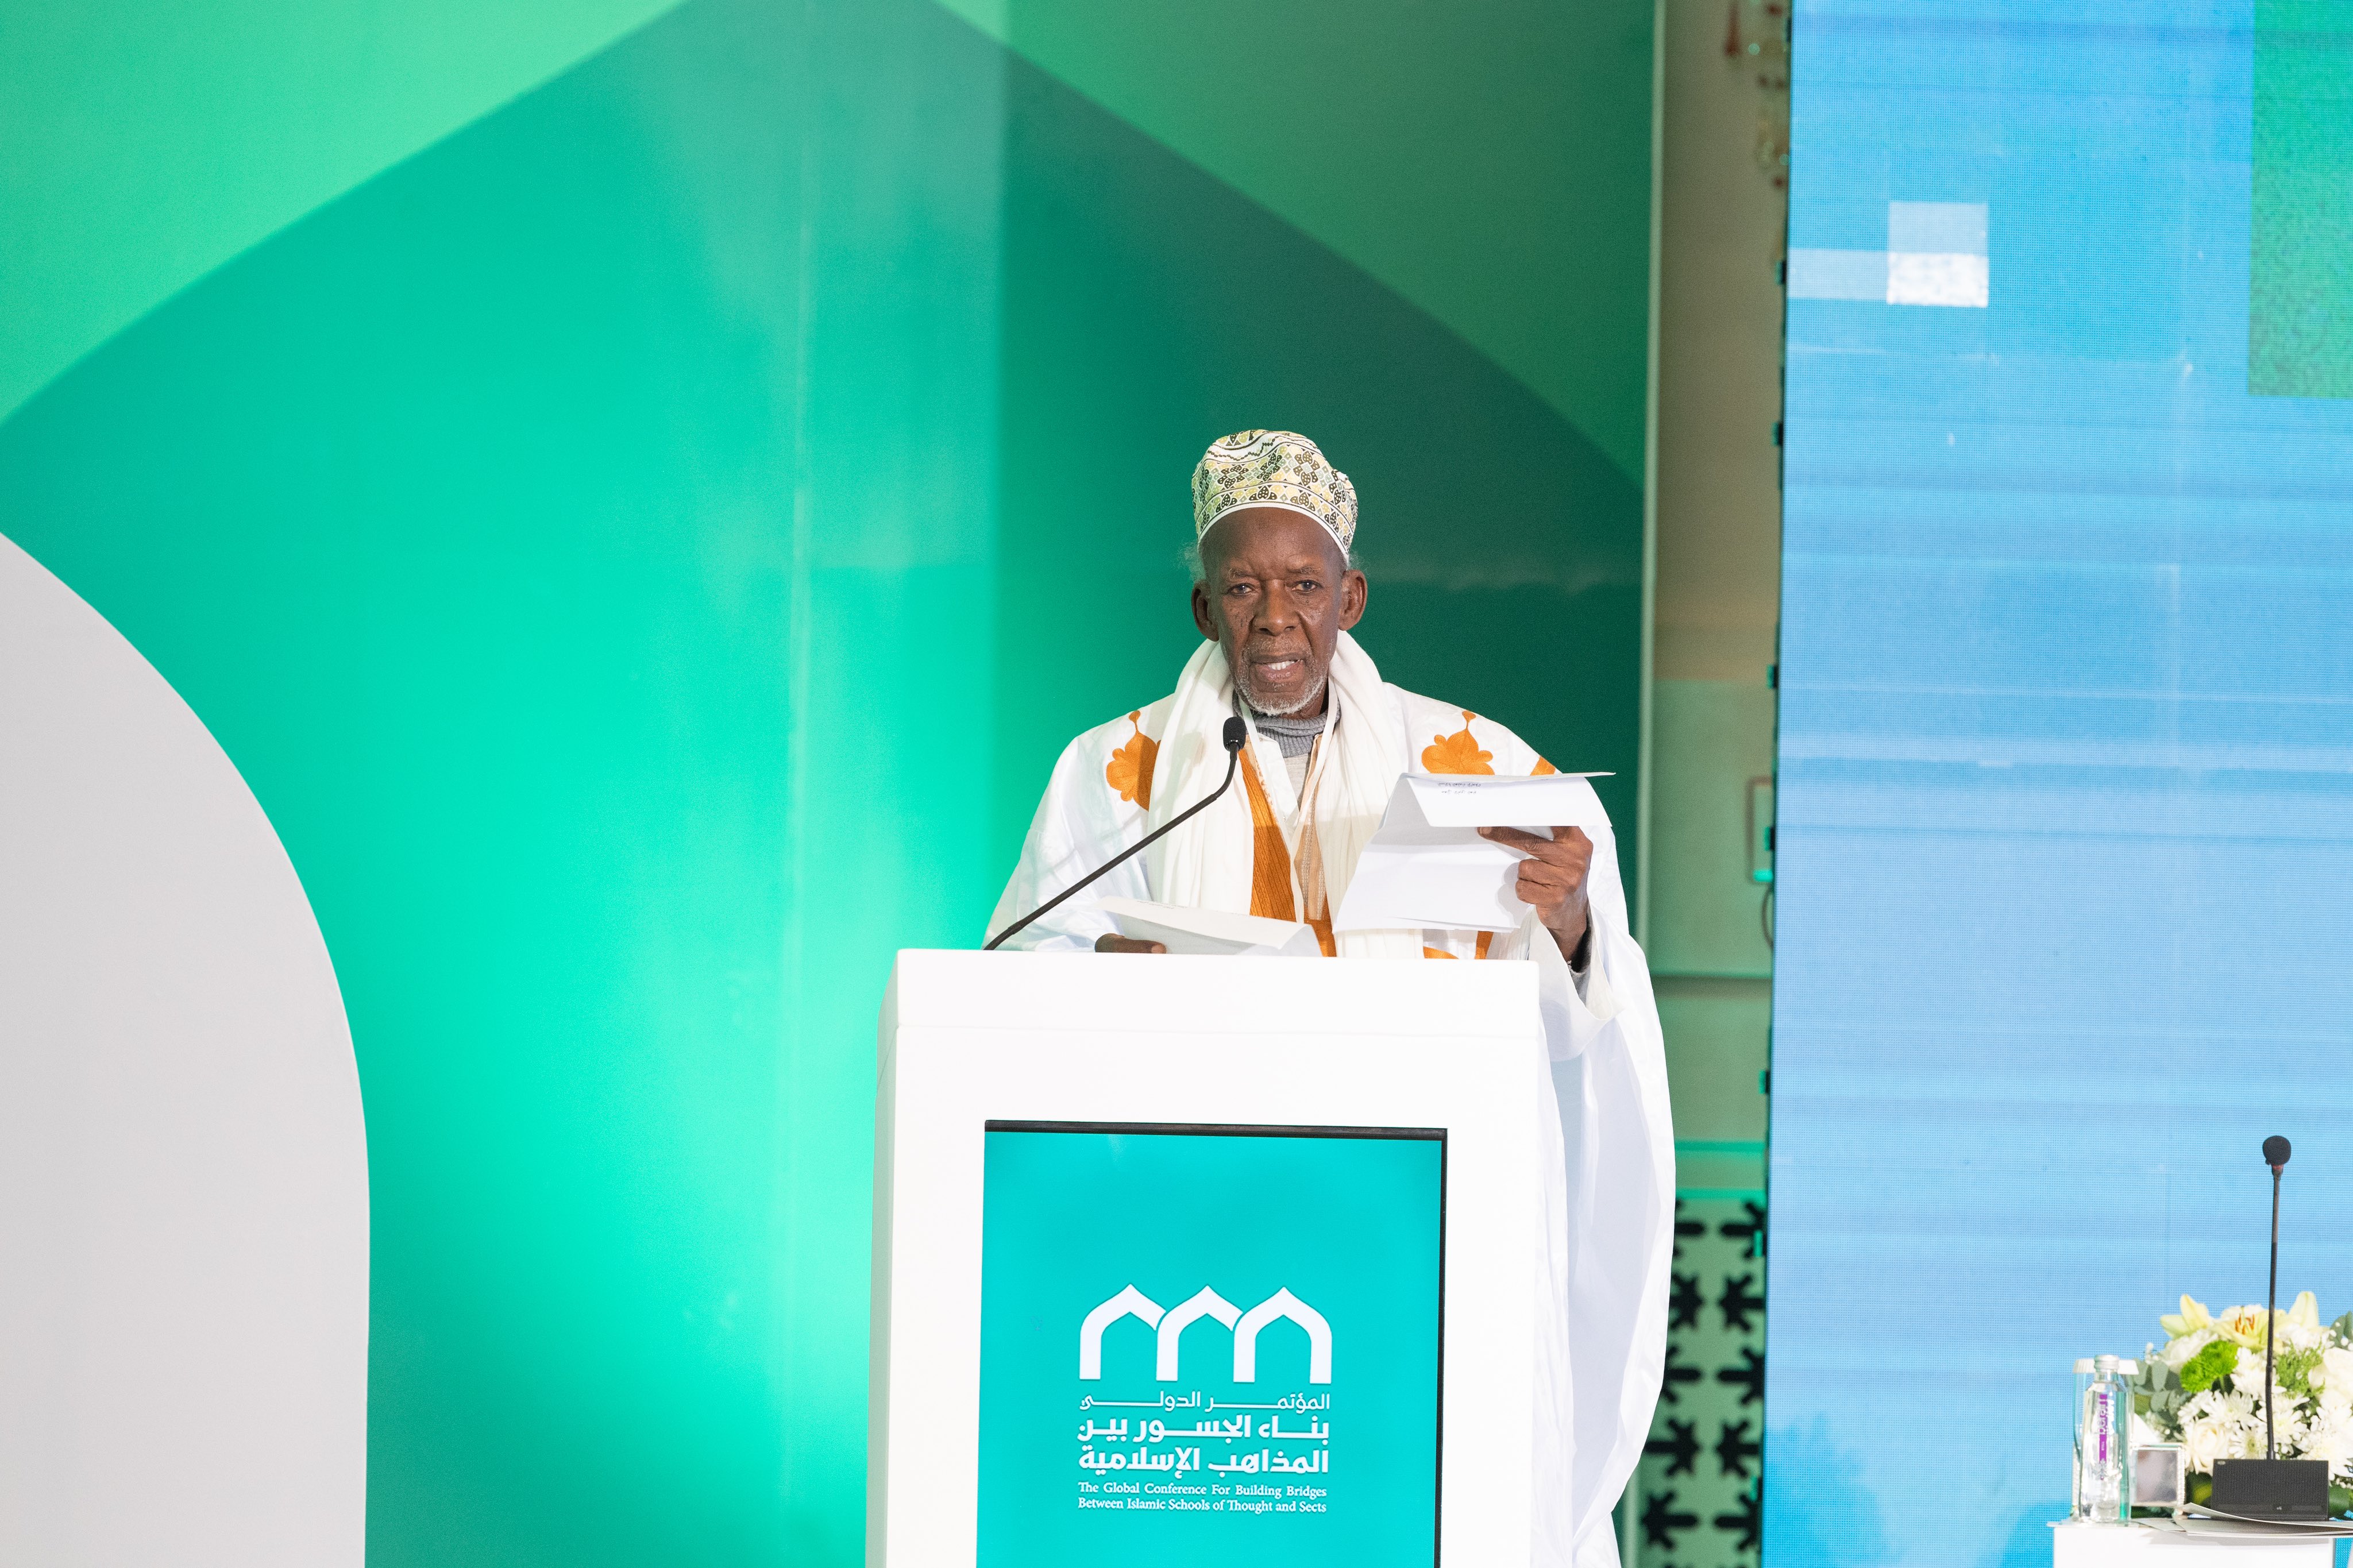 Yang Mulia Presiden Uni Islam Afrika, Syekh Mohammed Al- Mahi bin Sheikh Ibrahim Nias, dalam pidatonya pada sesi pembukaan konferensi: “Membangun Jembatan Antar Mazhab Islam”: